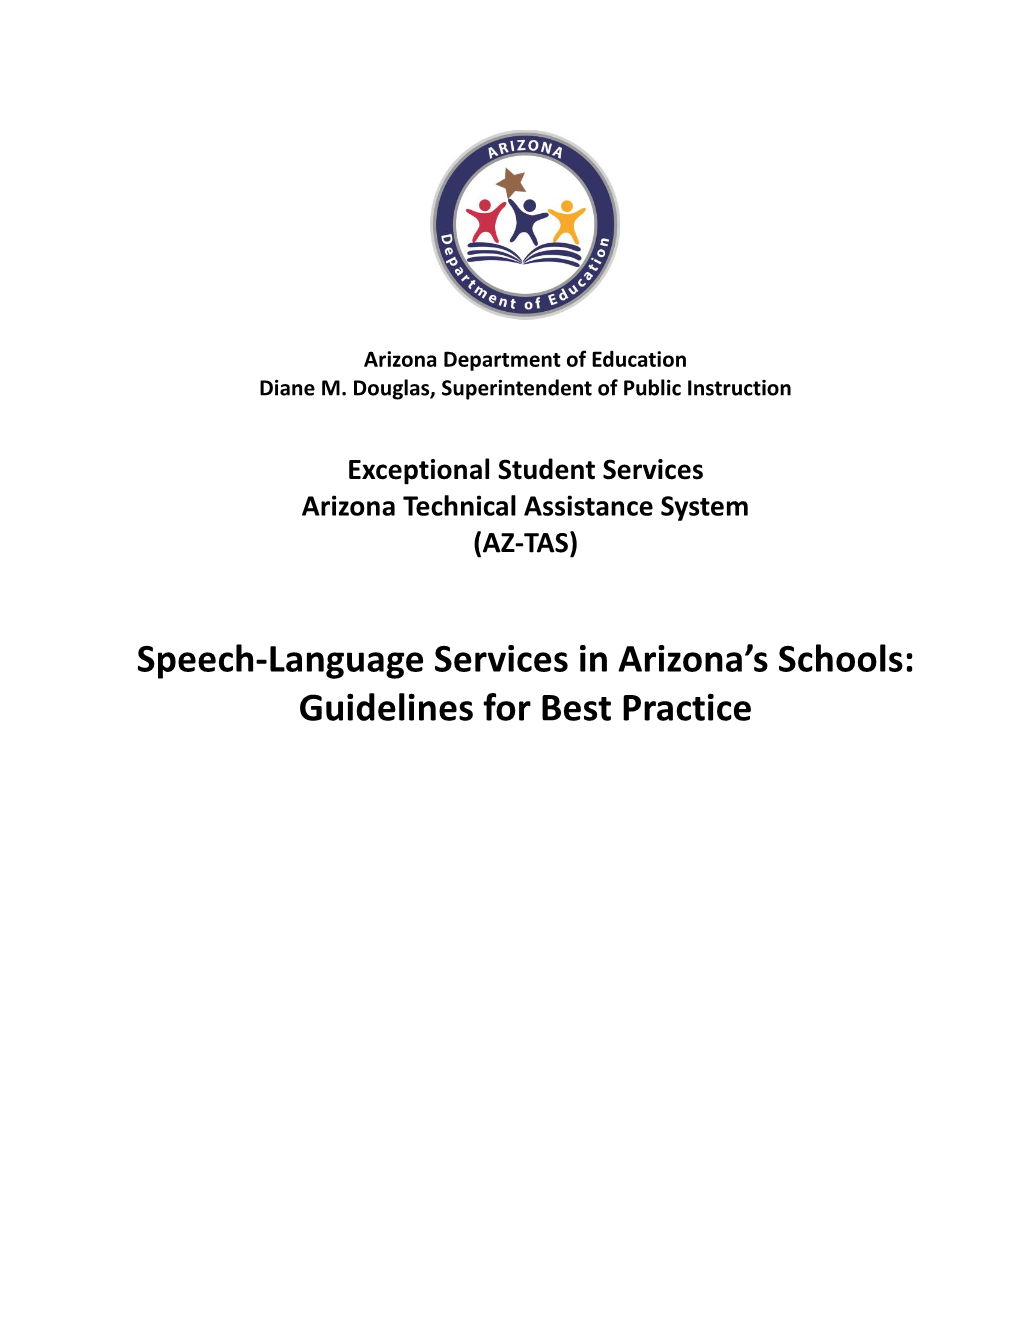 Speech-Language Services in Arizona Schools: Guidelines for Best Practice